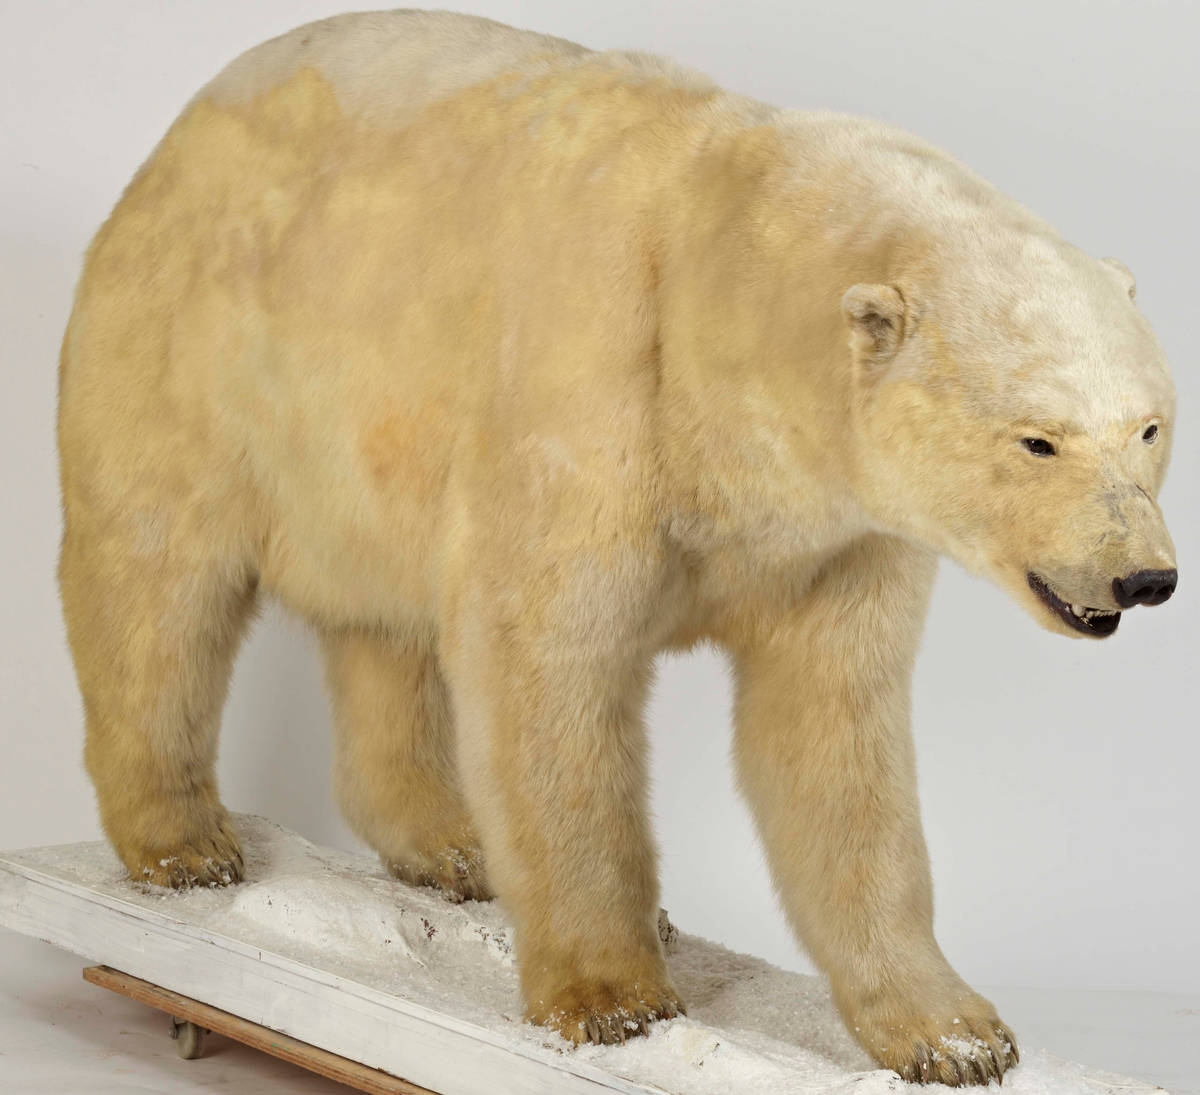 北极熊 Gallery Image